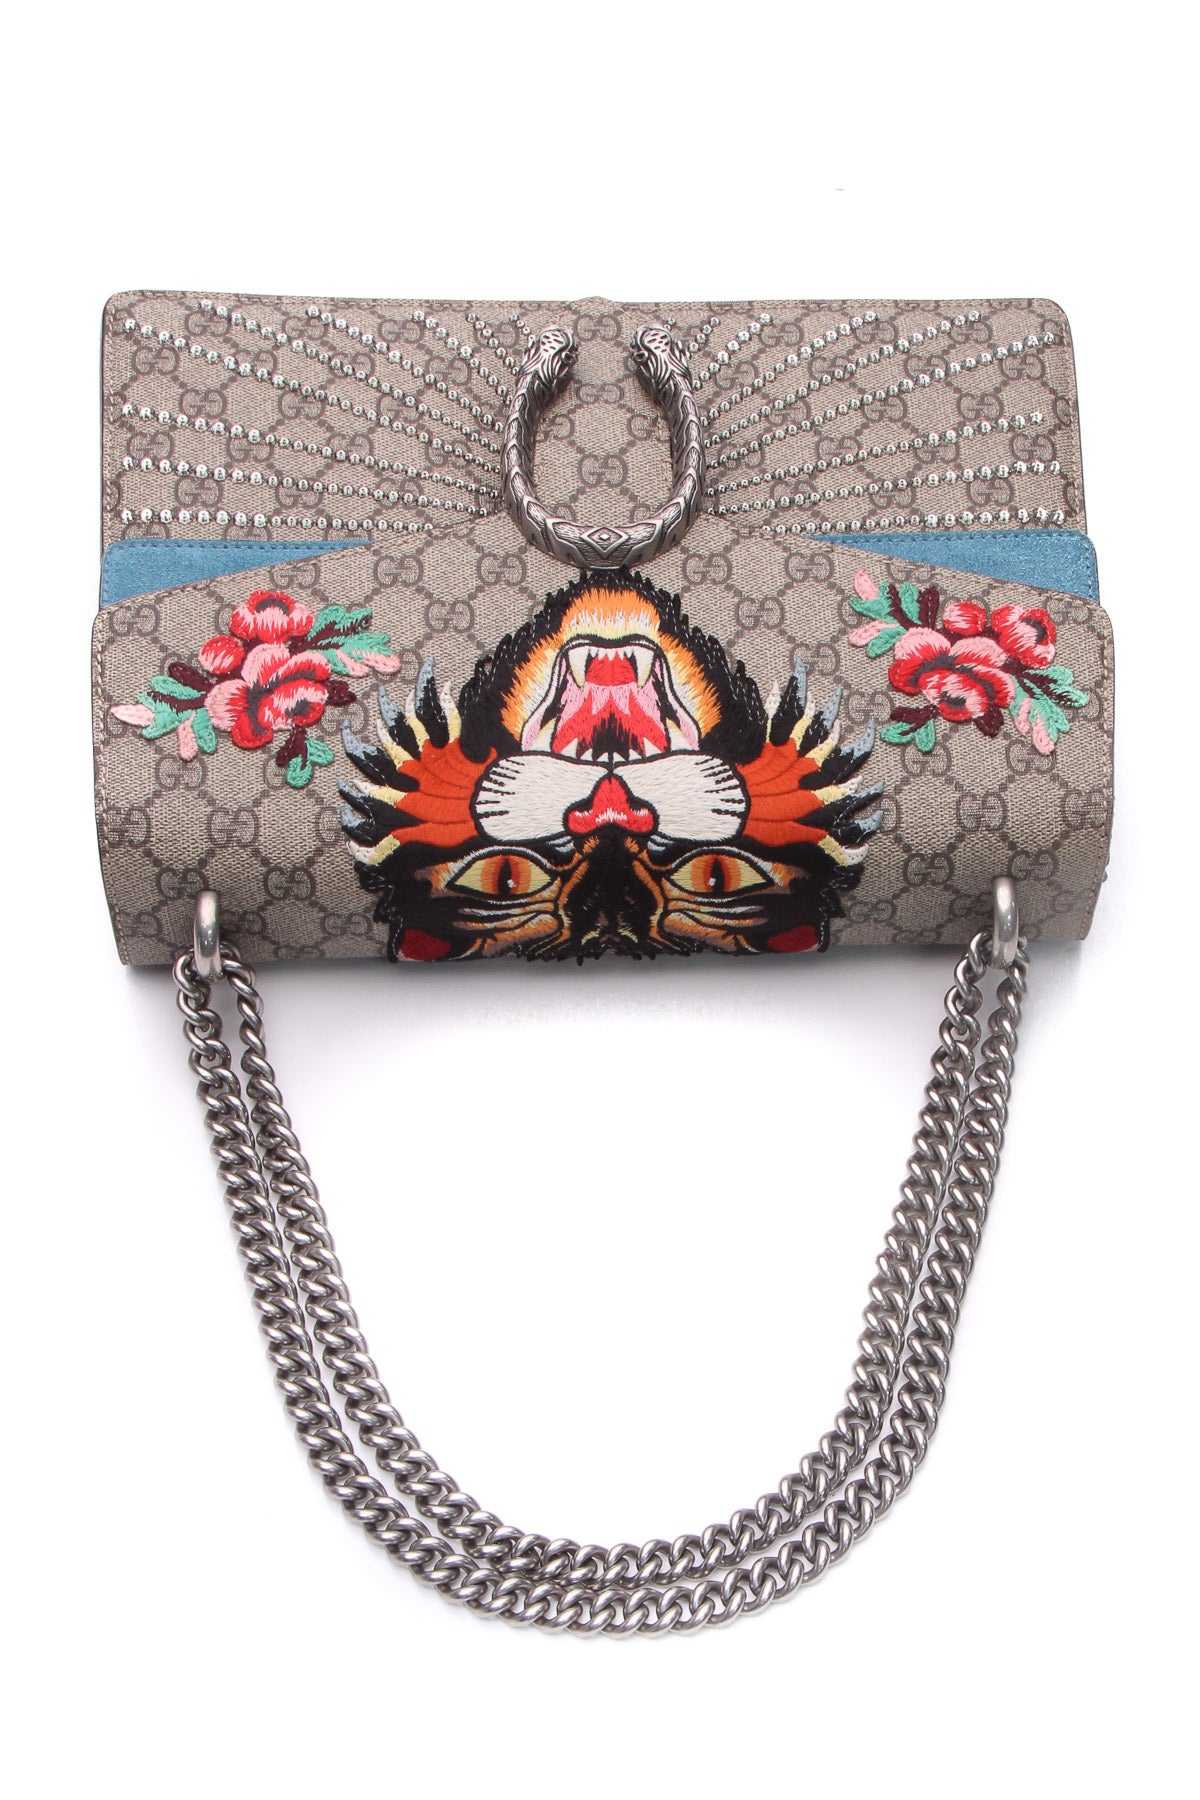 Gucci Bee Embroidered Medium Dionysus Shoulder Bag